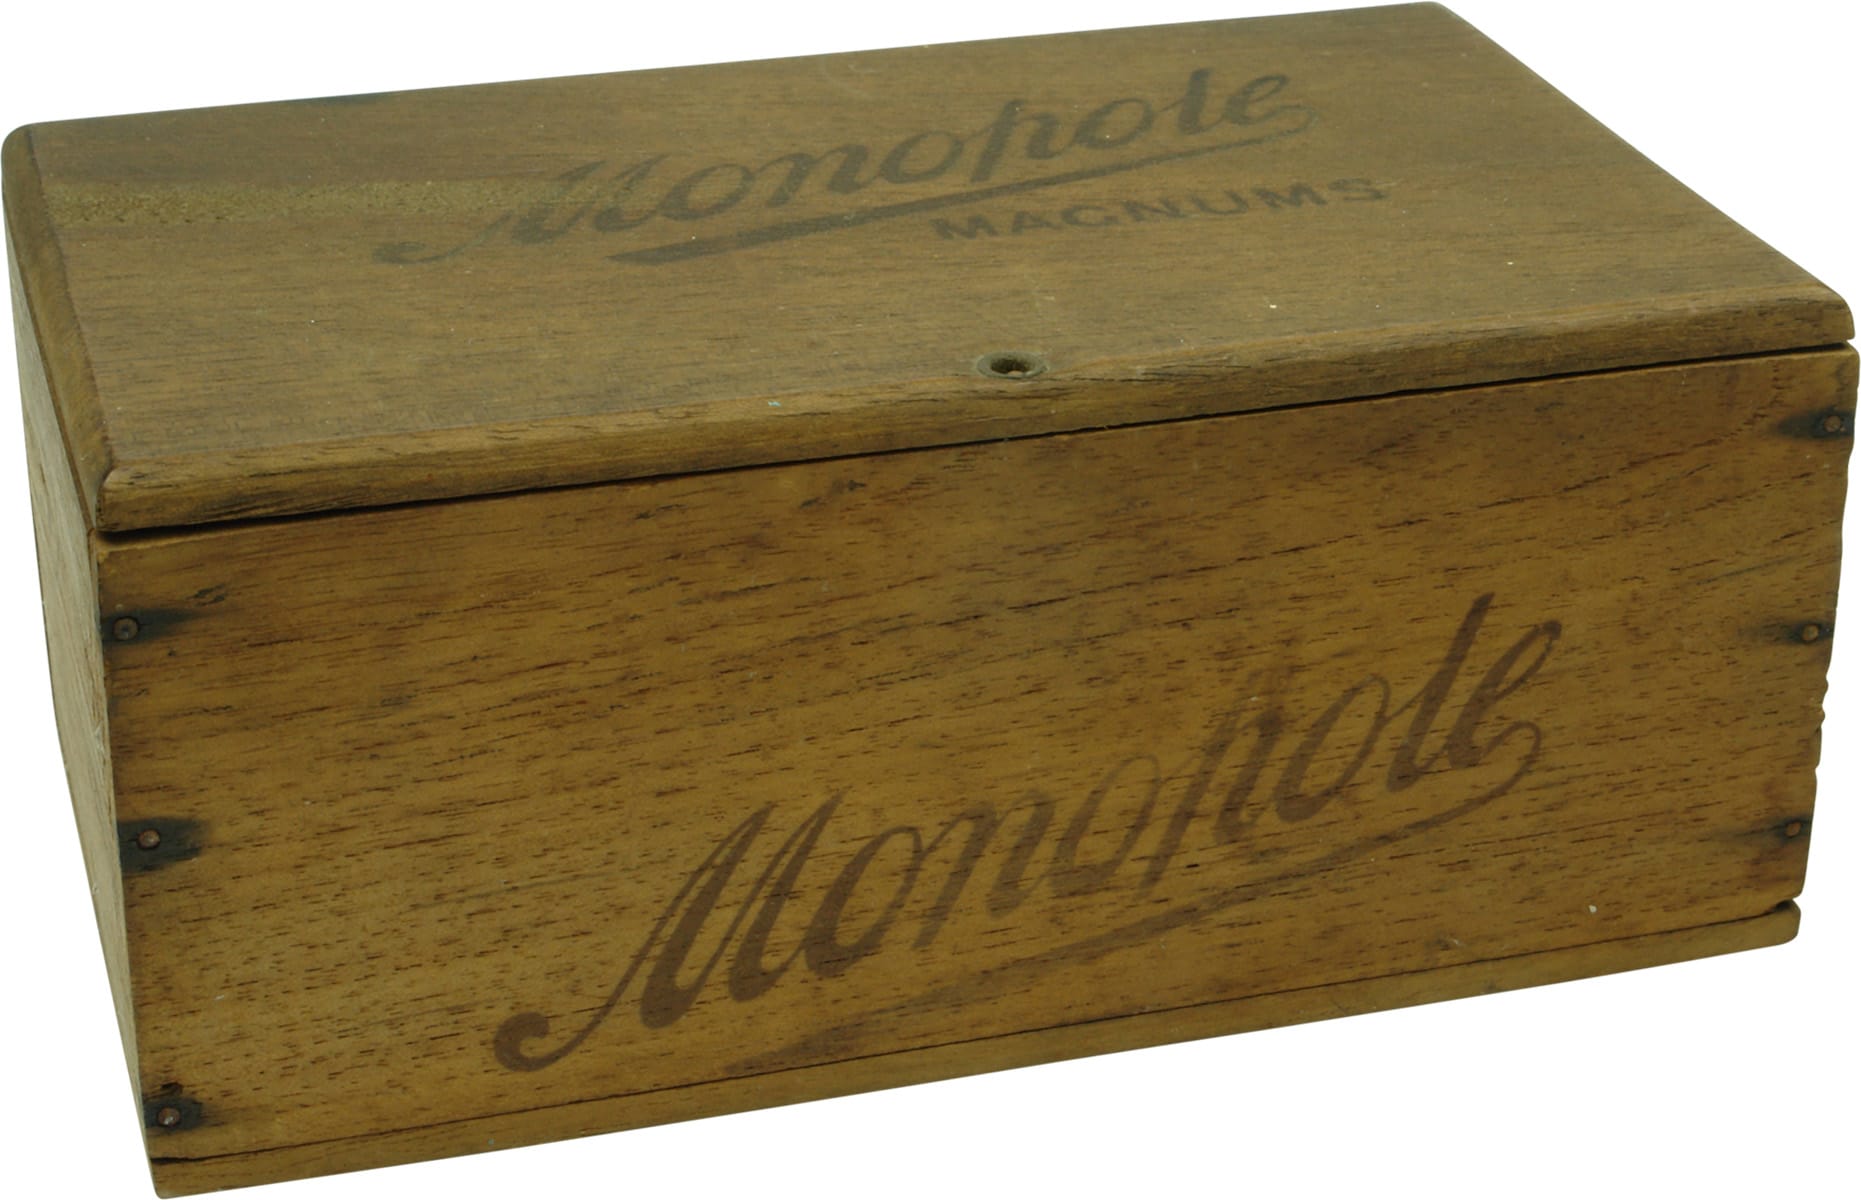 Monopole Magnums Cigar Box